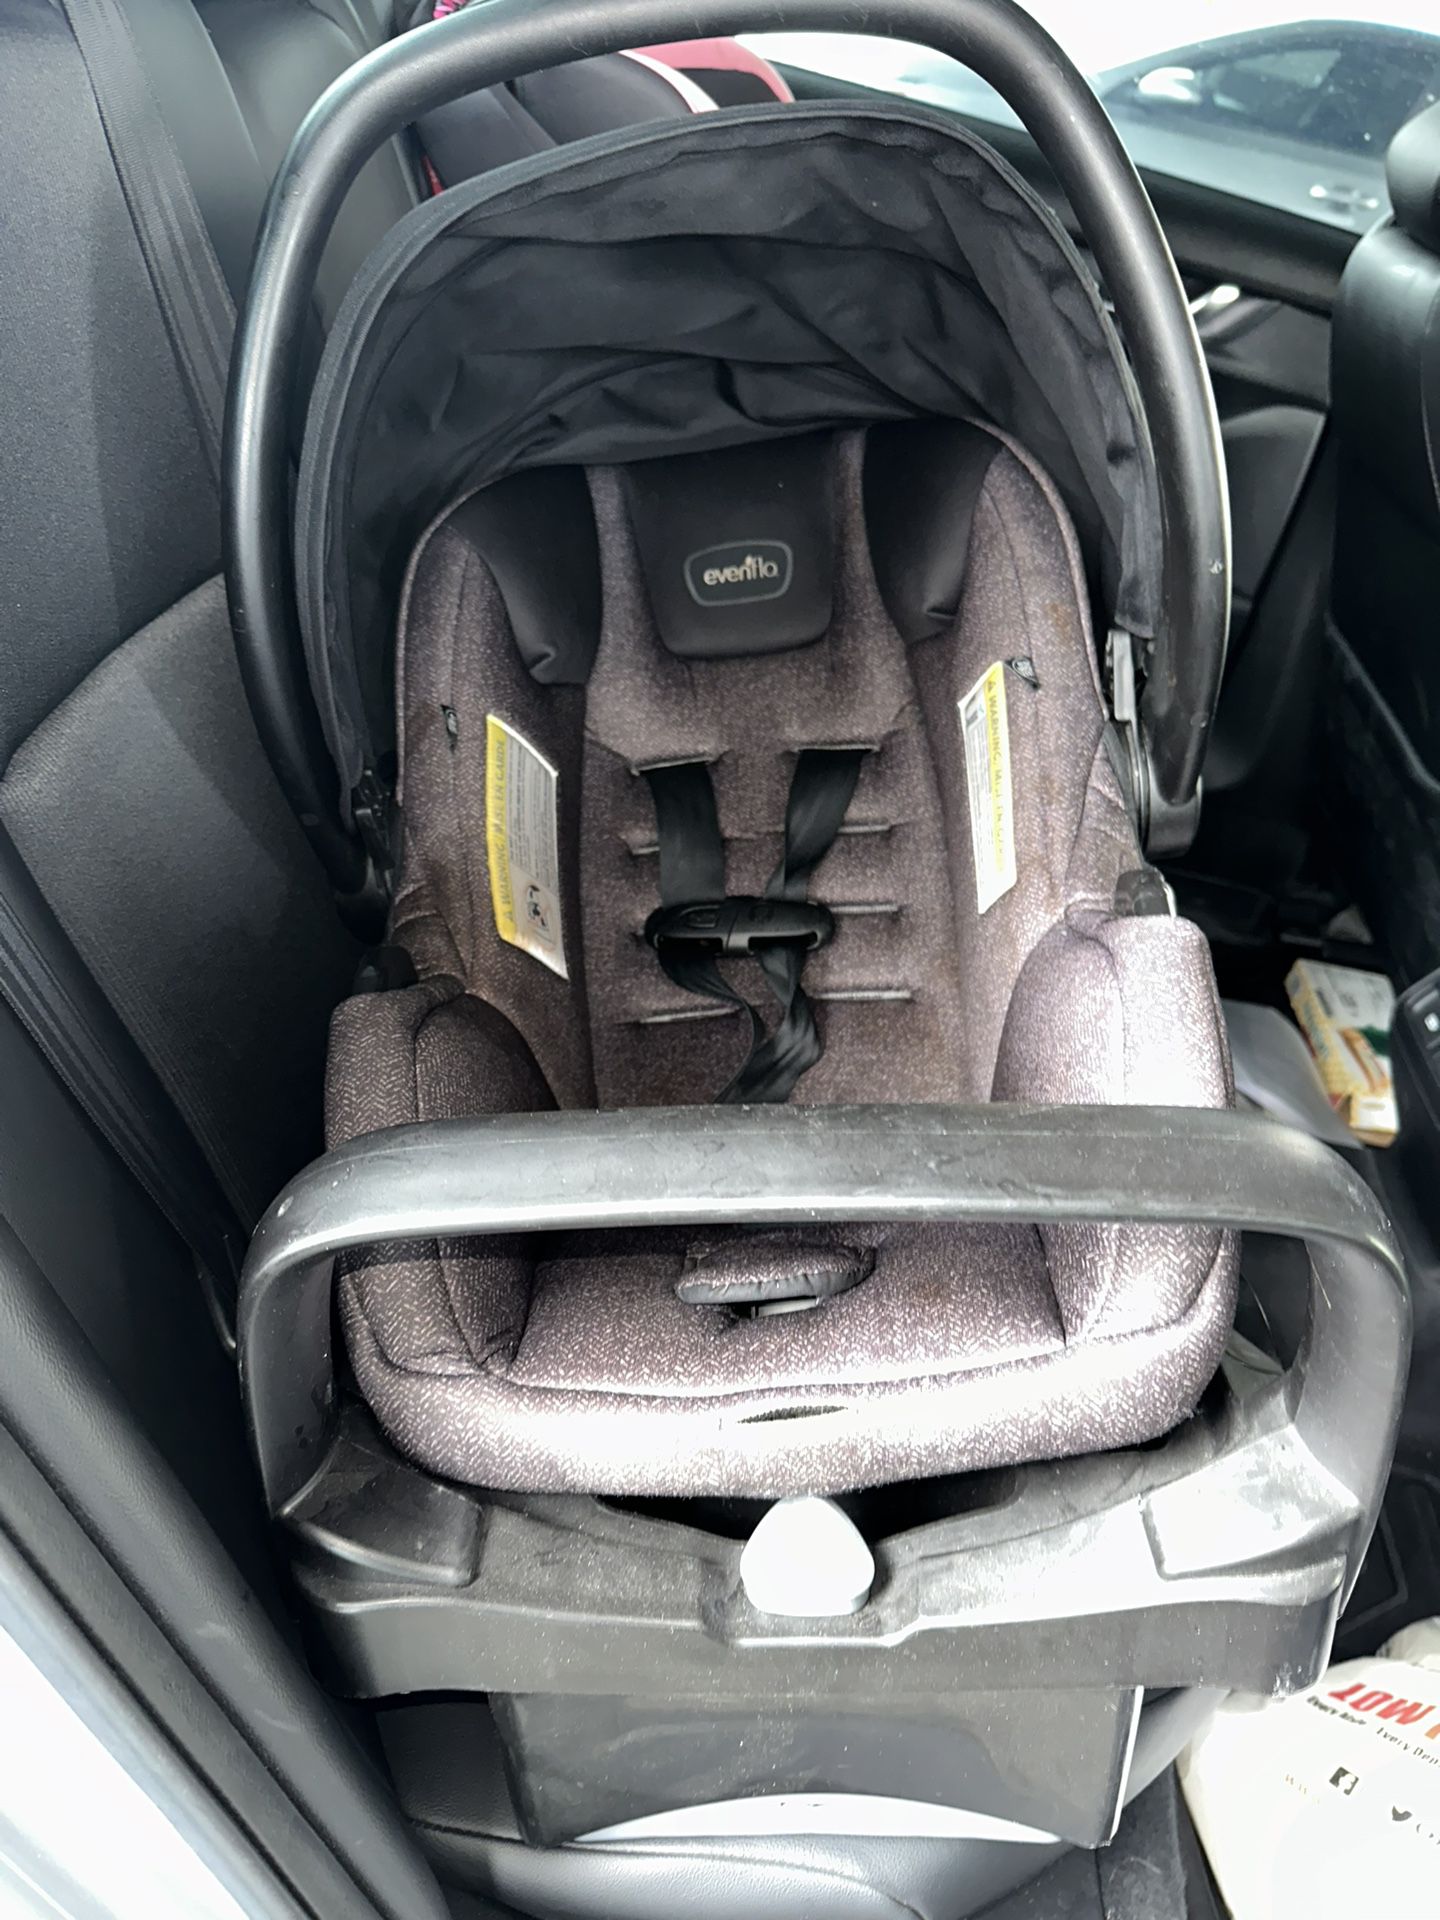 EvenFlo Infant Car Seat